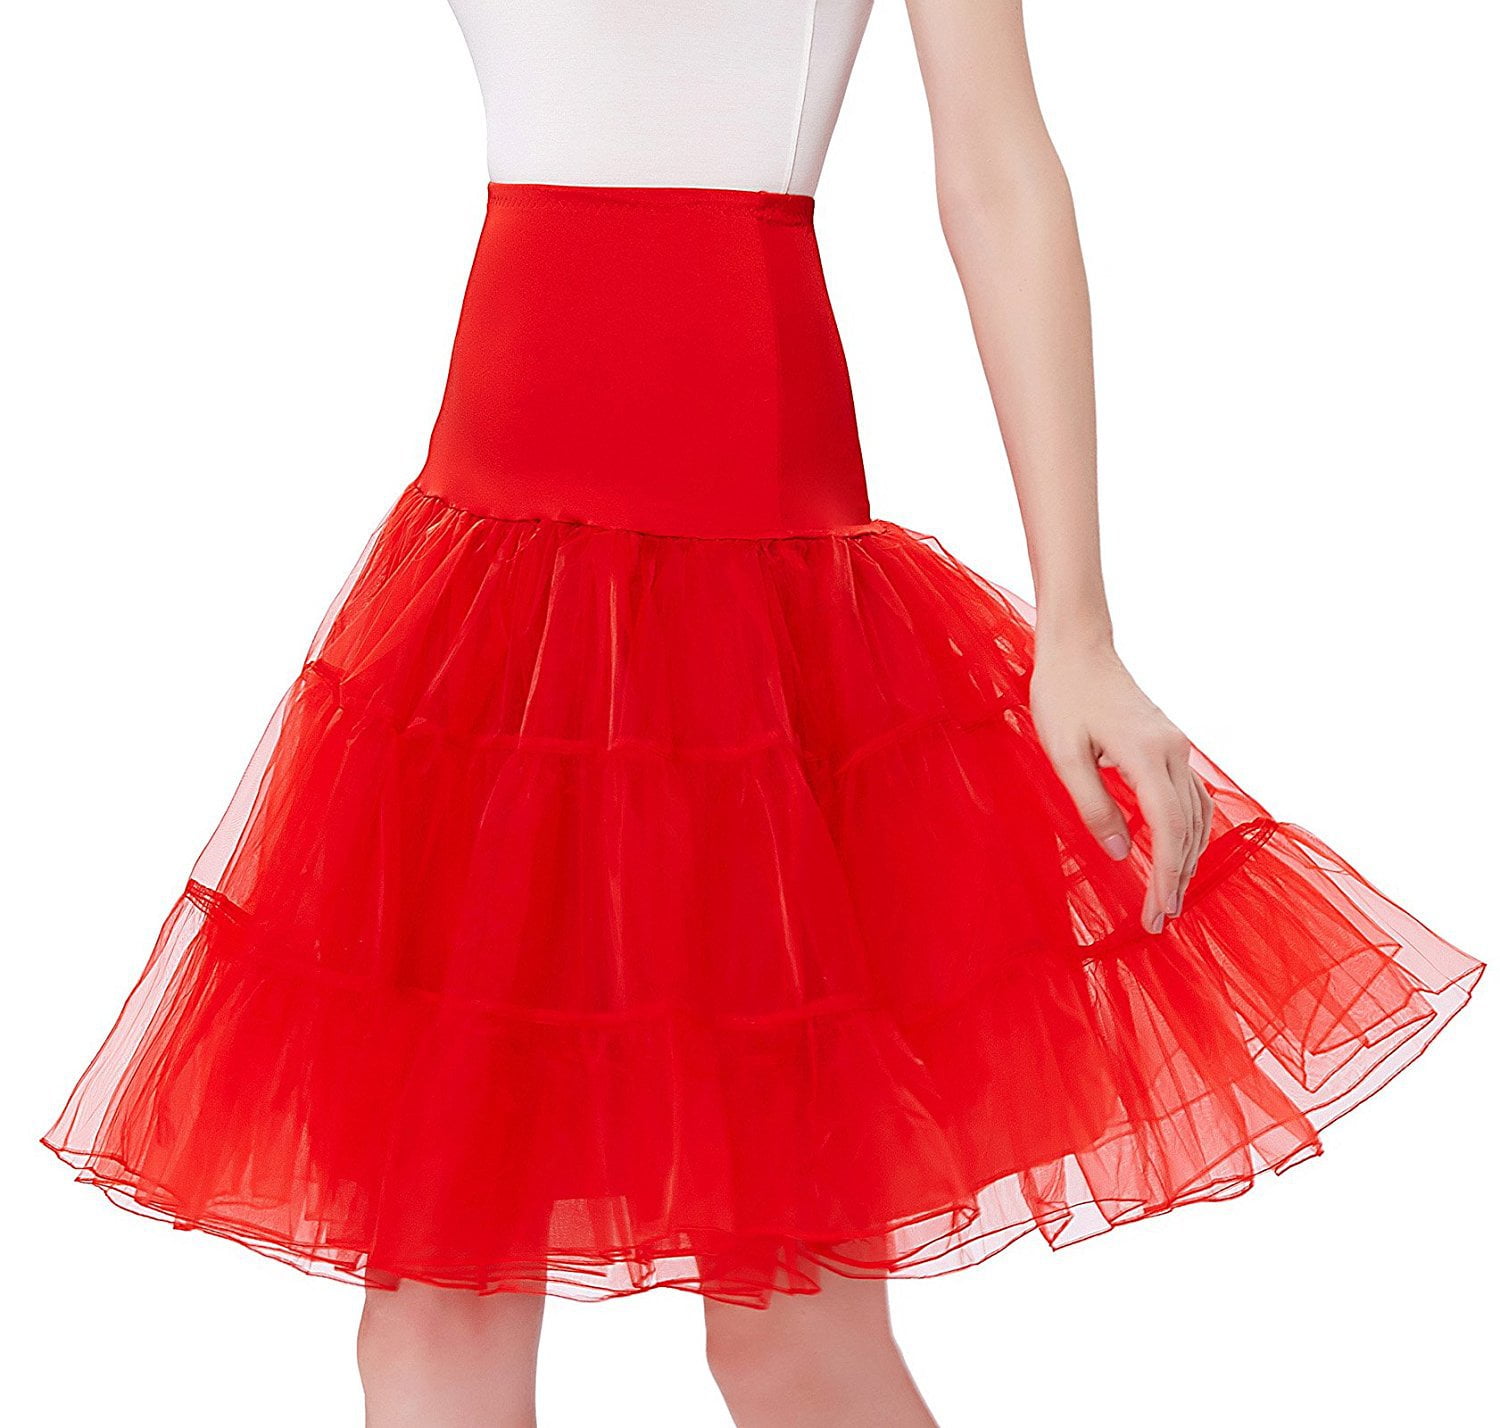 New Petticoat Retro Underskirt Candy Colour Swing 50s Rockabilly SKIRT Plus Size 